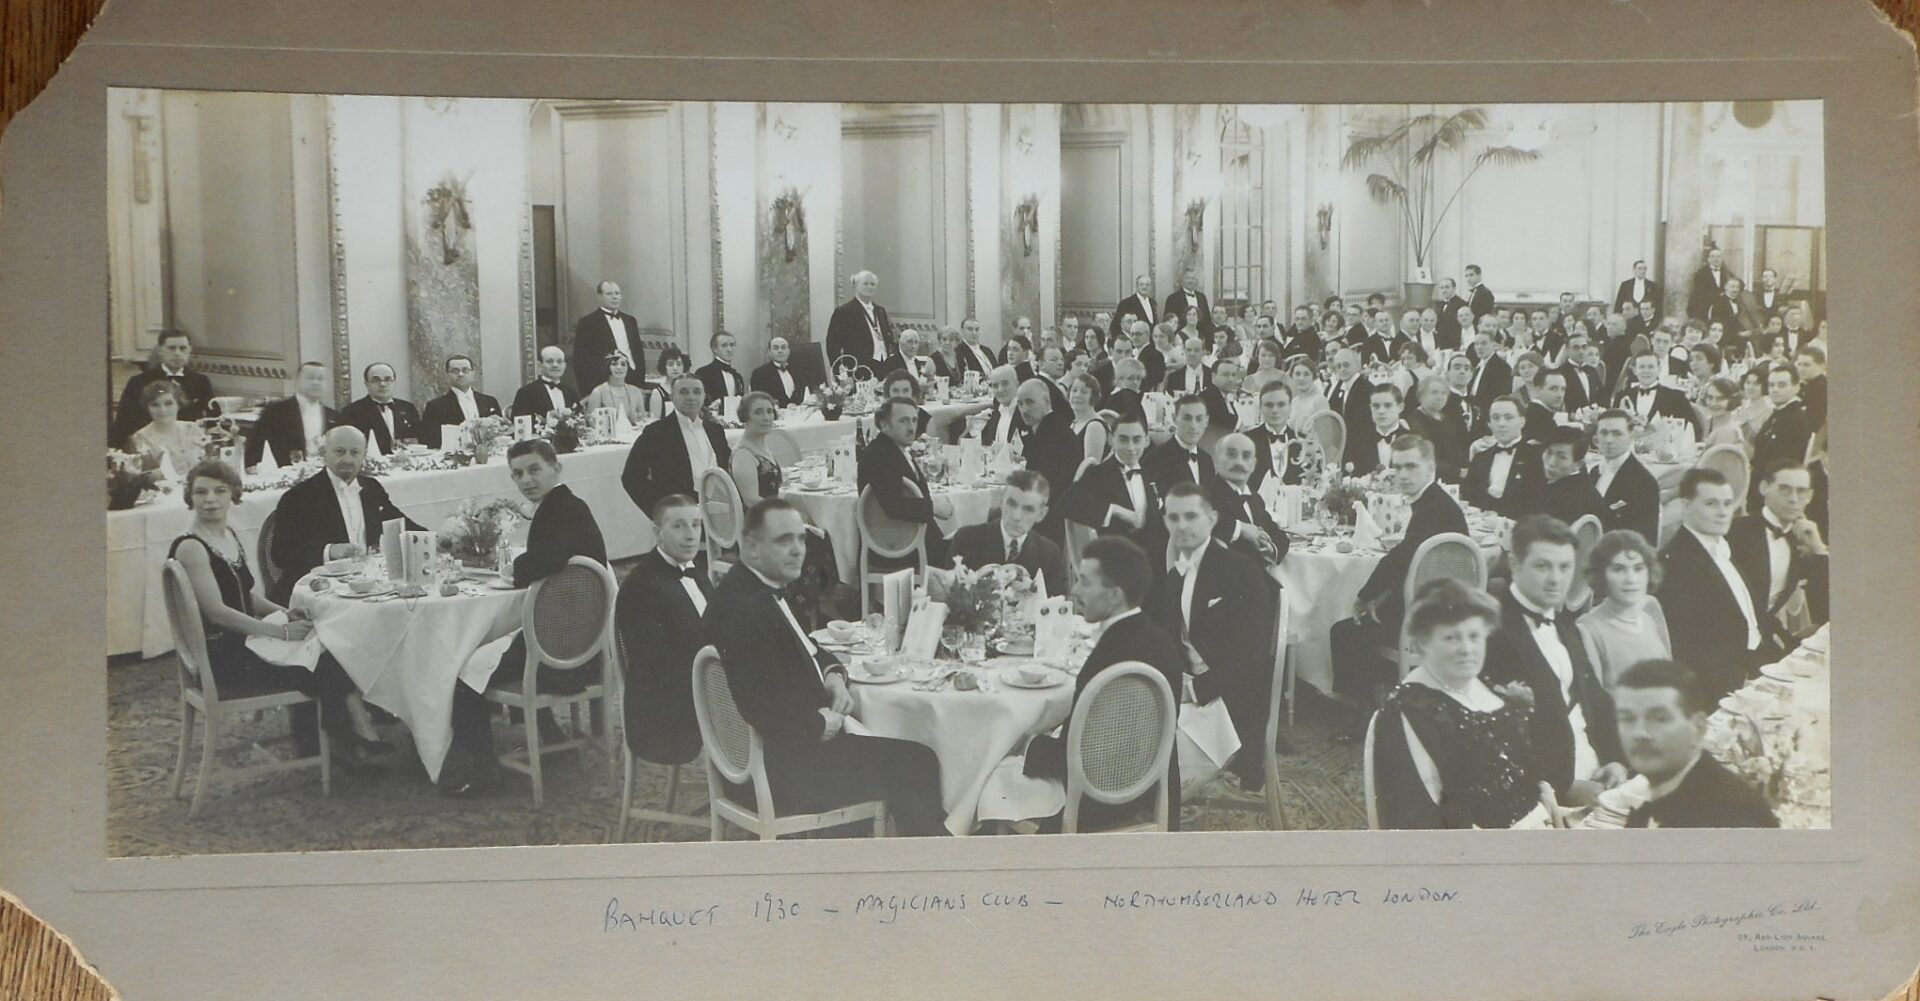 The Magicians’ Club 1930 Banquet photograph